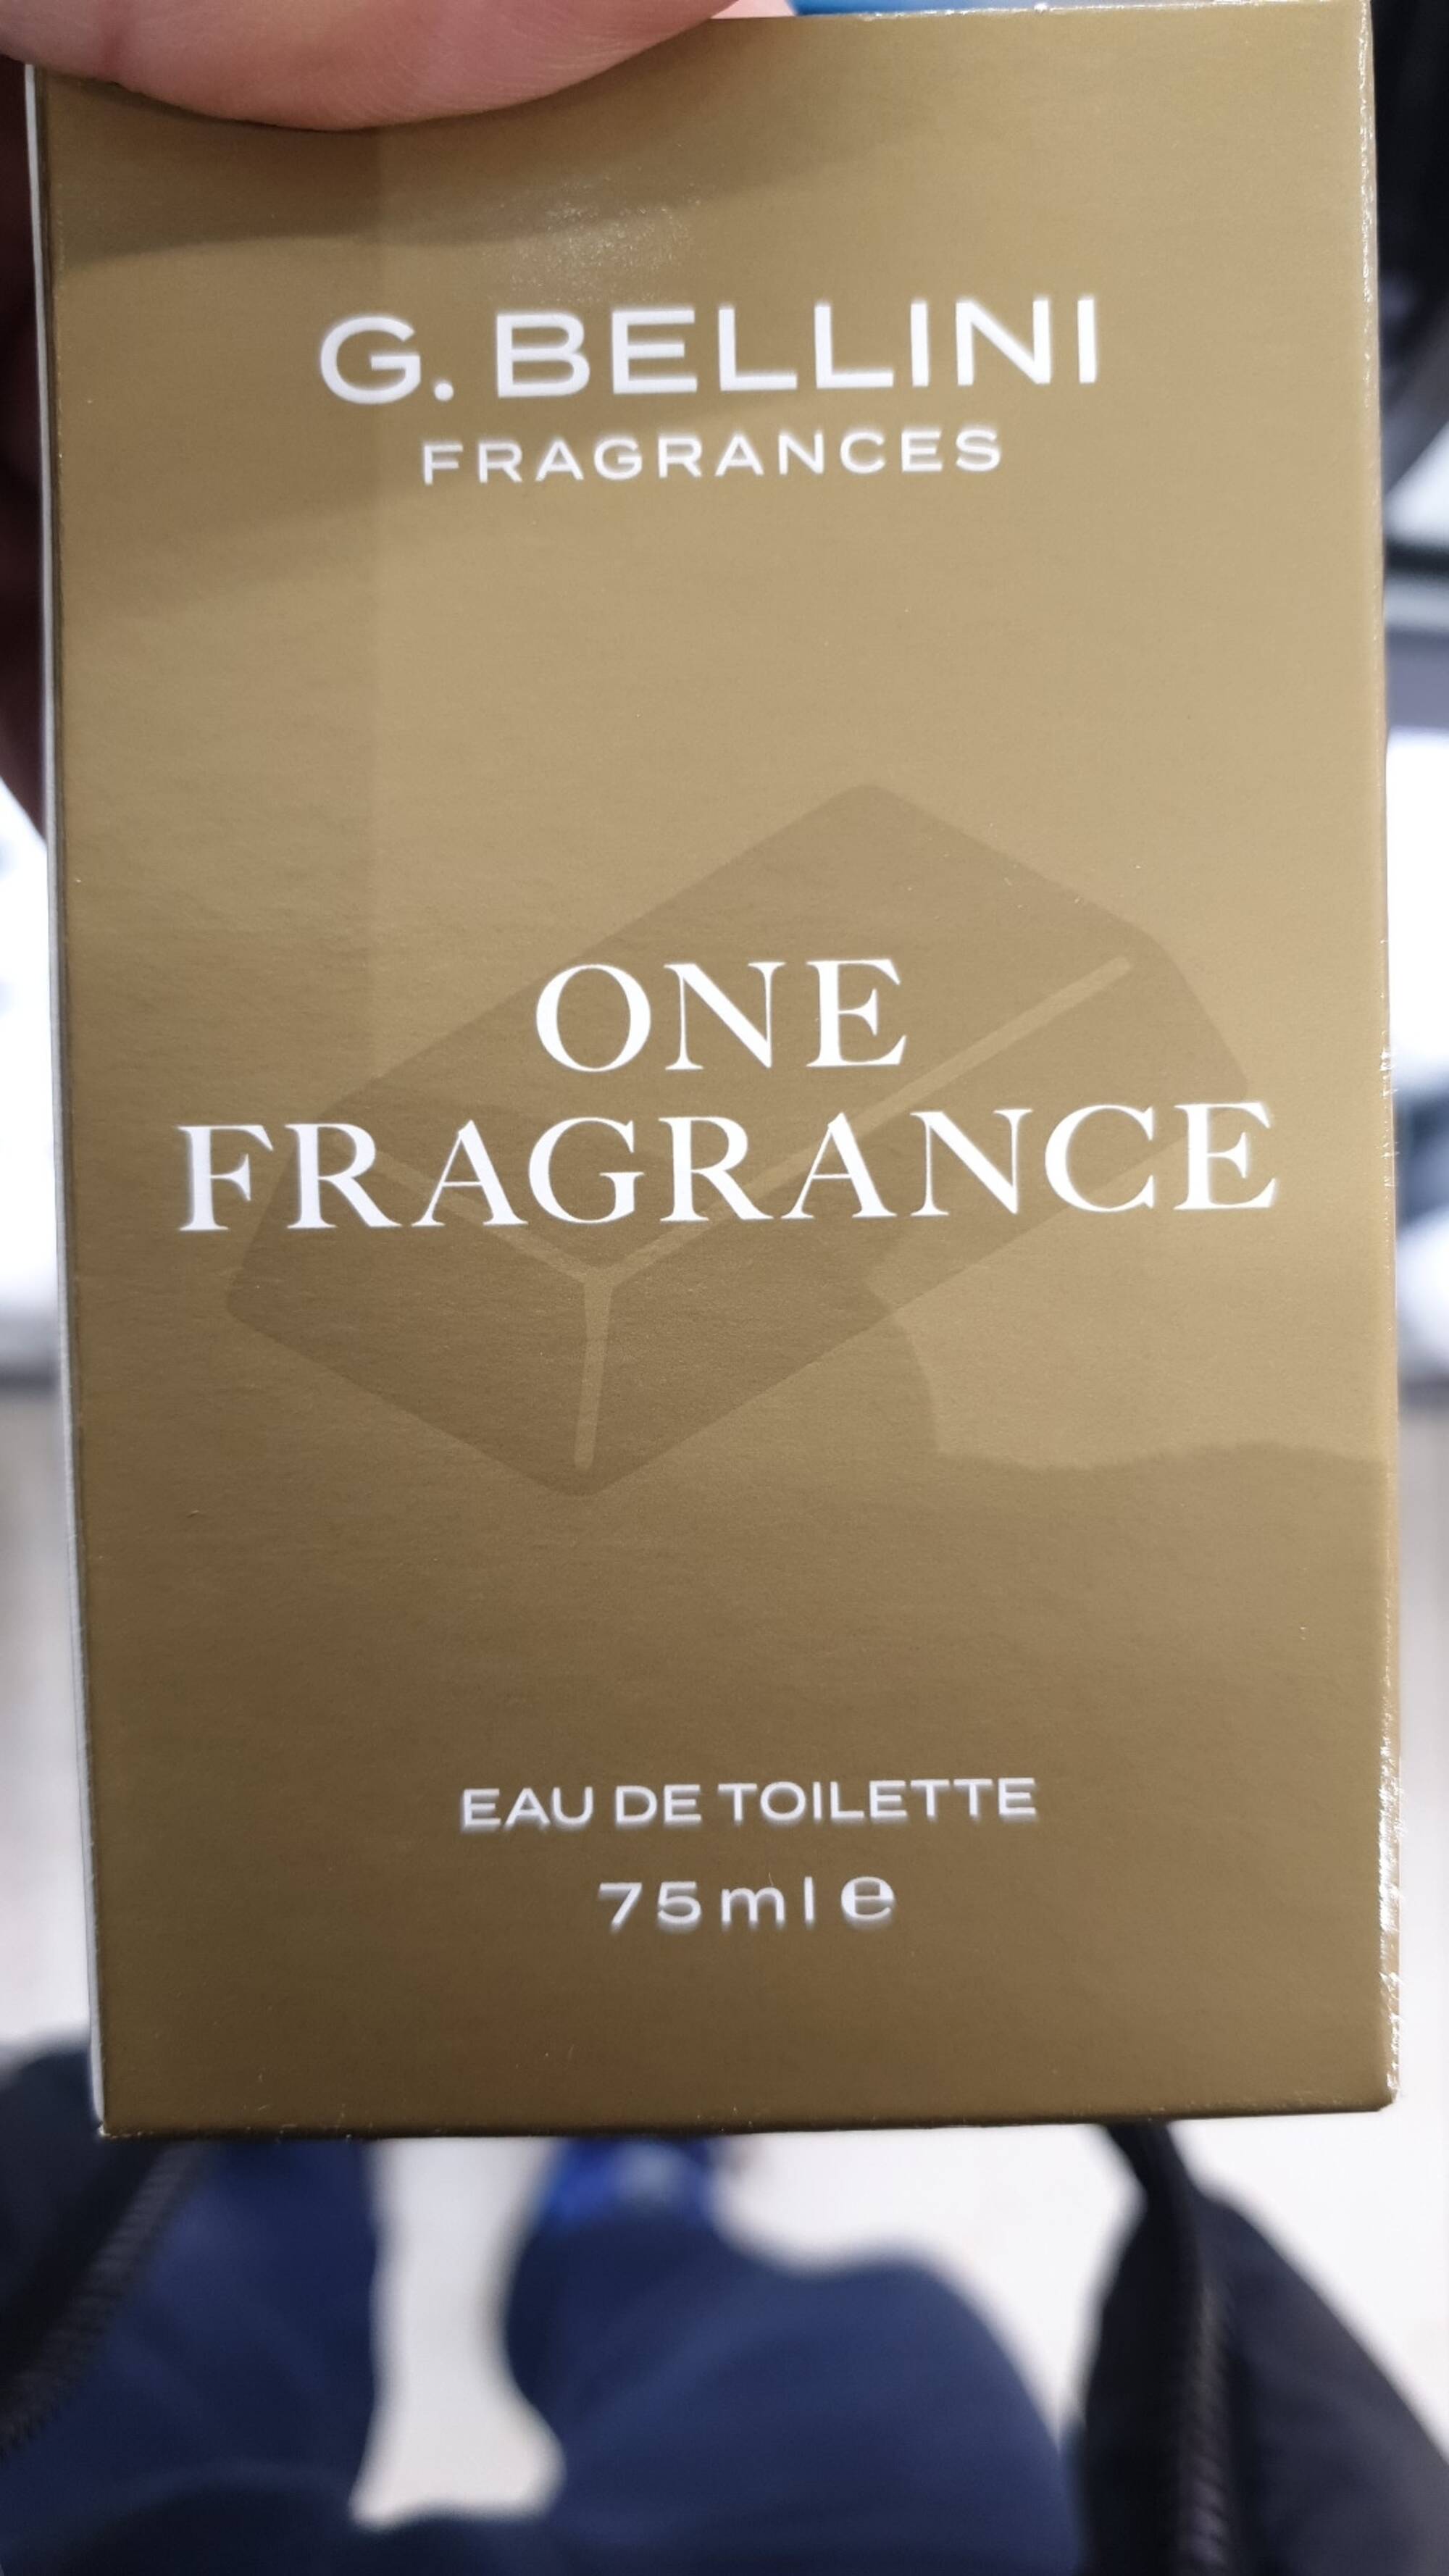 G BELLINI - One fragrance - Eau de toilette